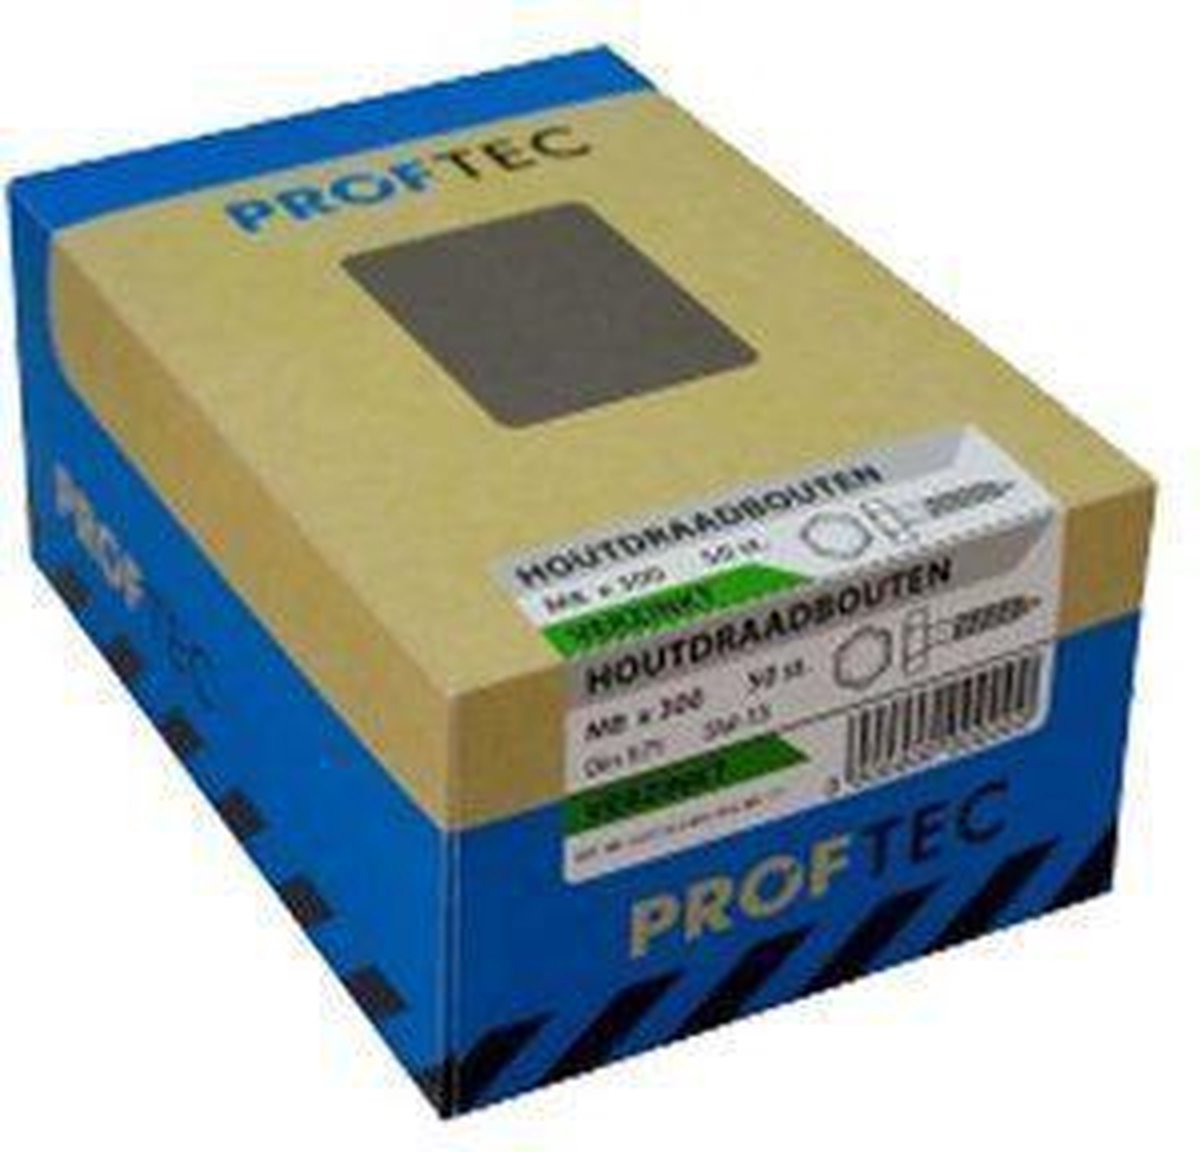 Proftec-Tap Bout DIN933 8.8 verzinkt M8X25mm 20 stuks